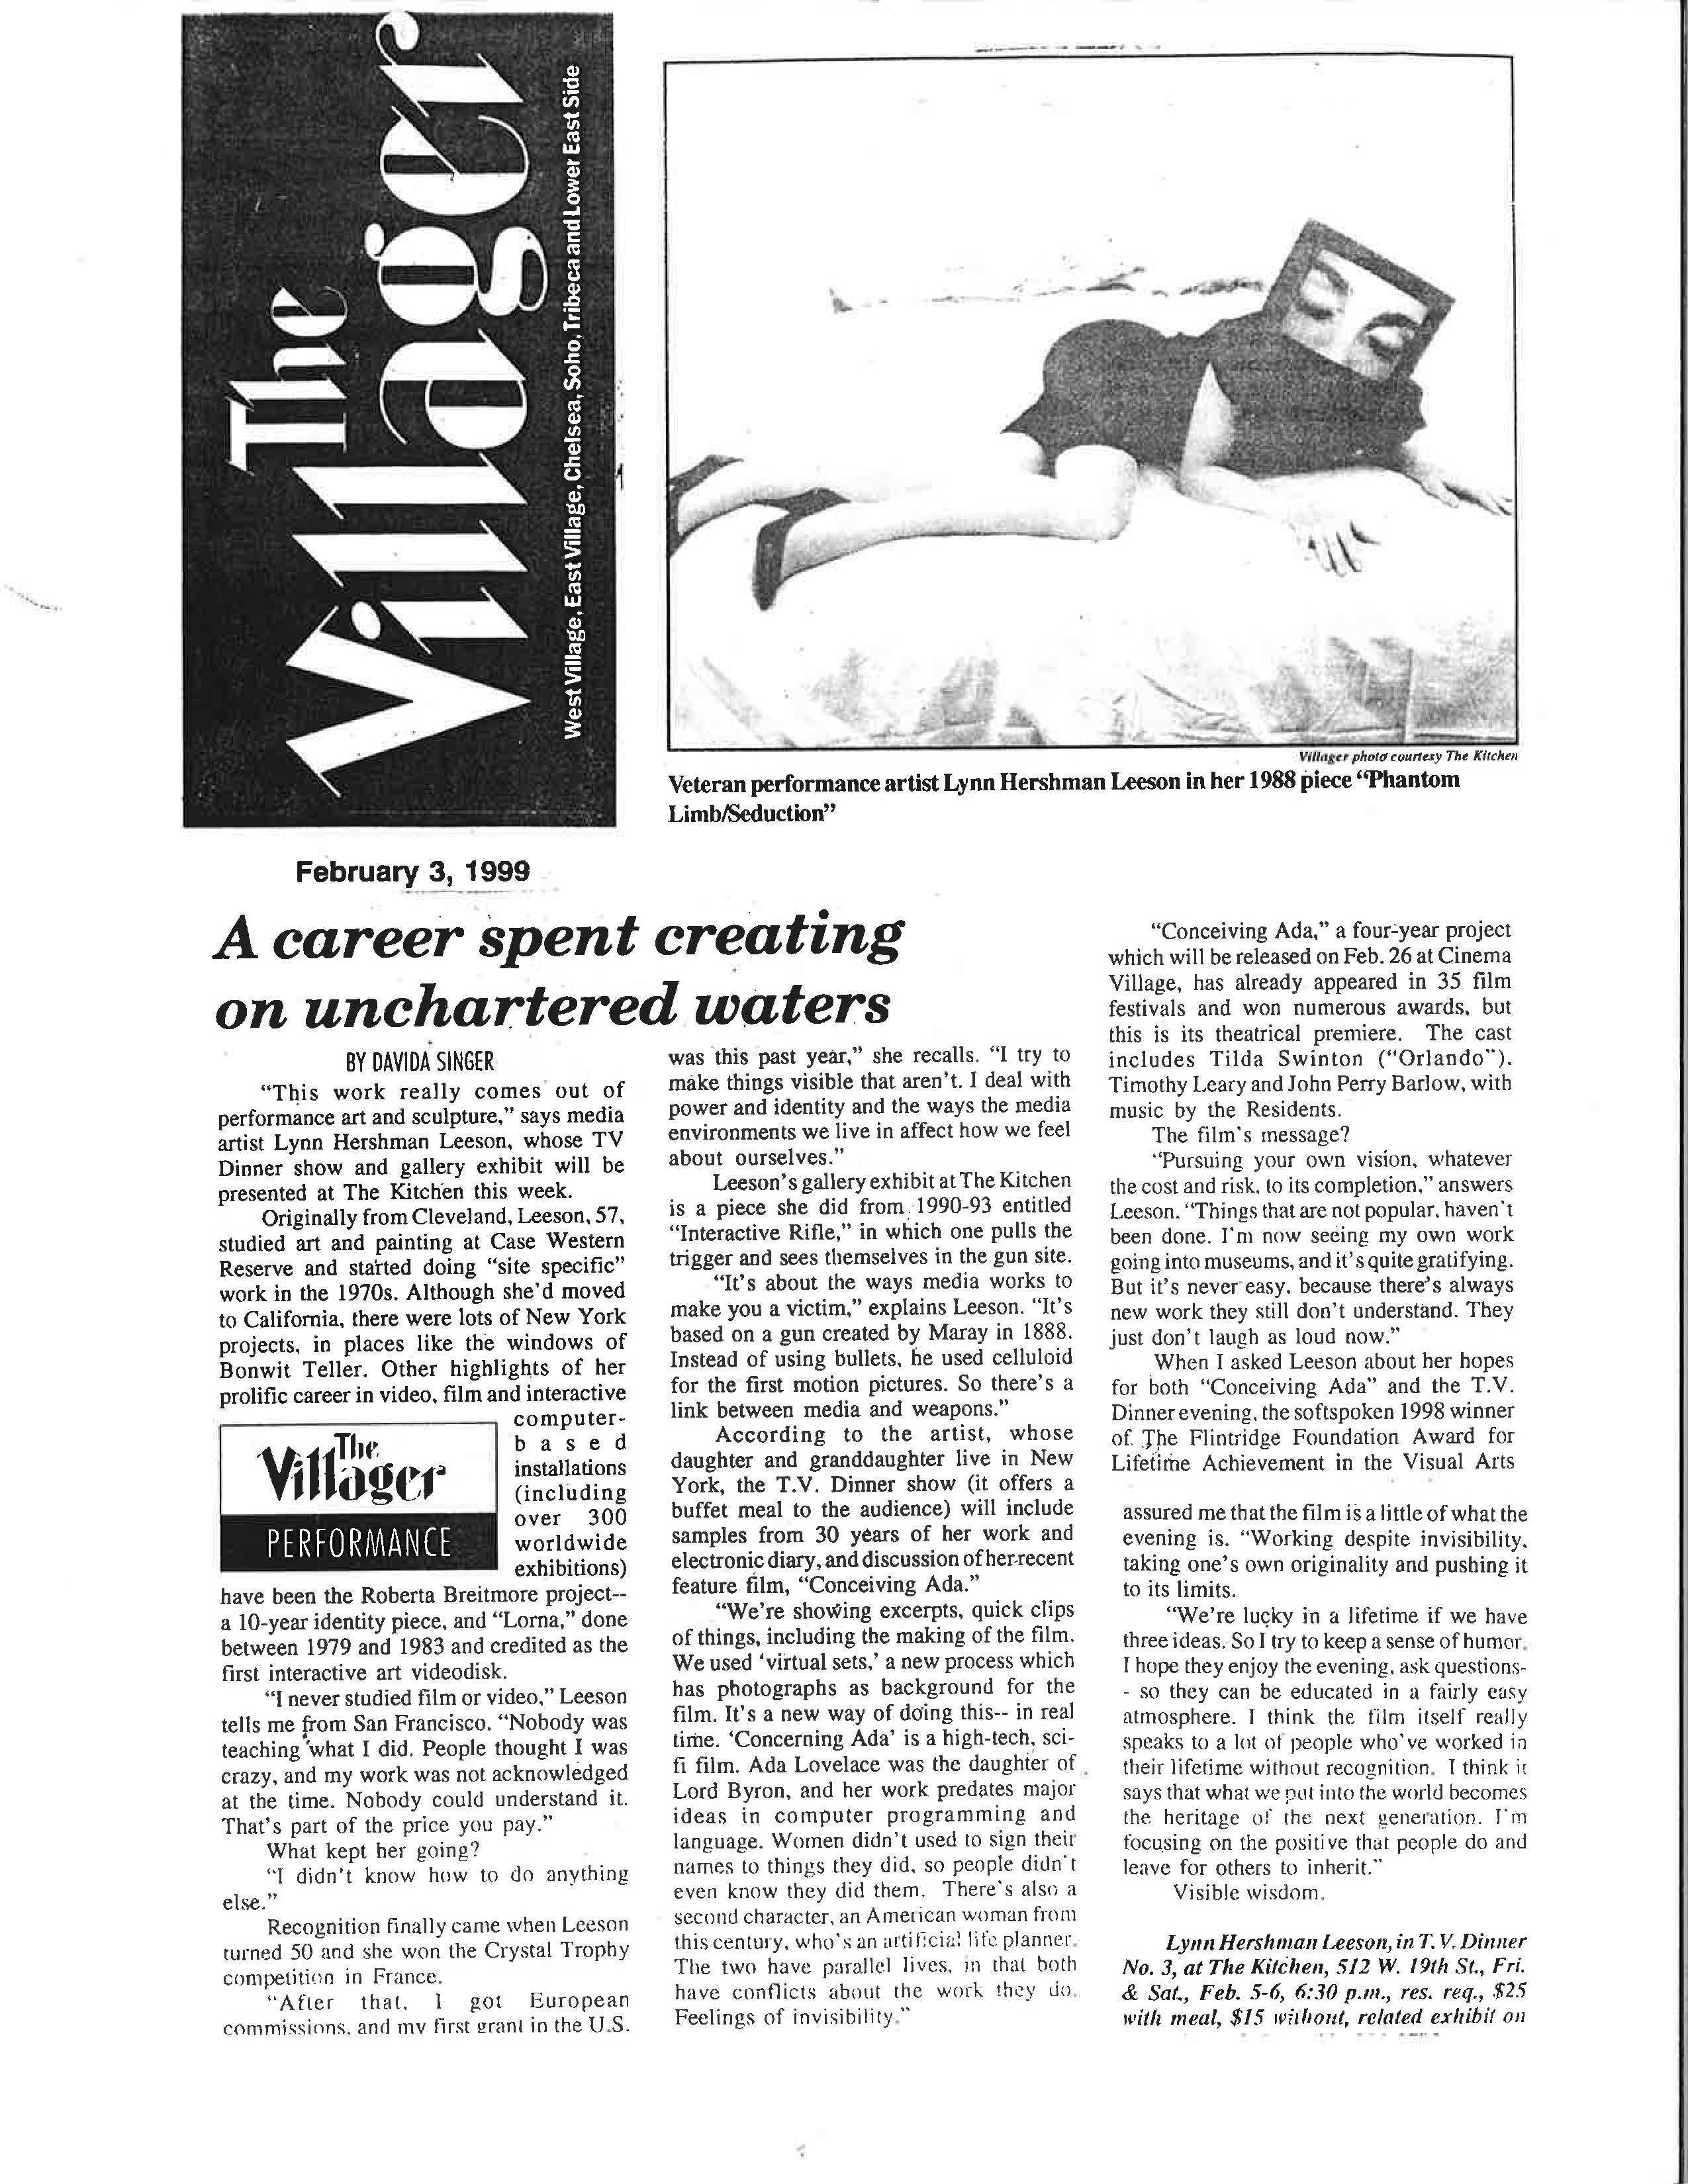 Newsprint review of Lynn Hershman Leeson's work in The Villager, 1999.